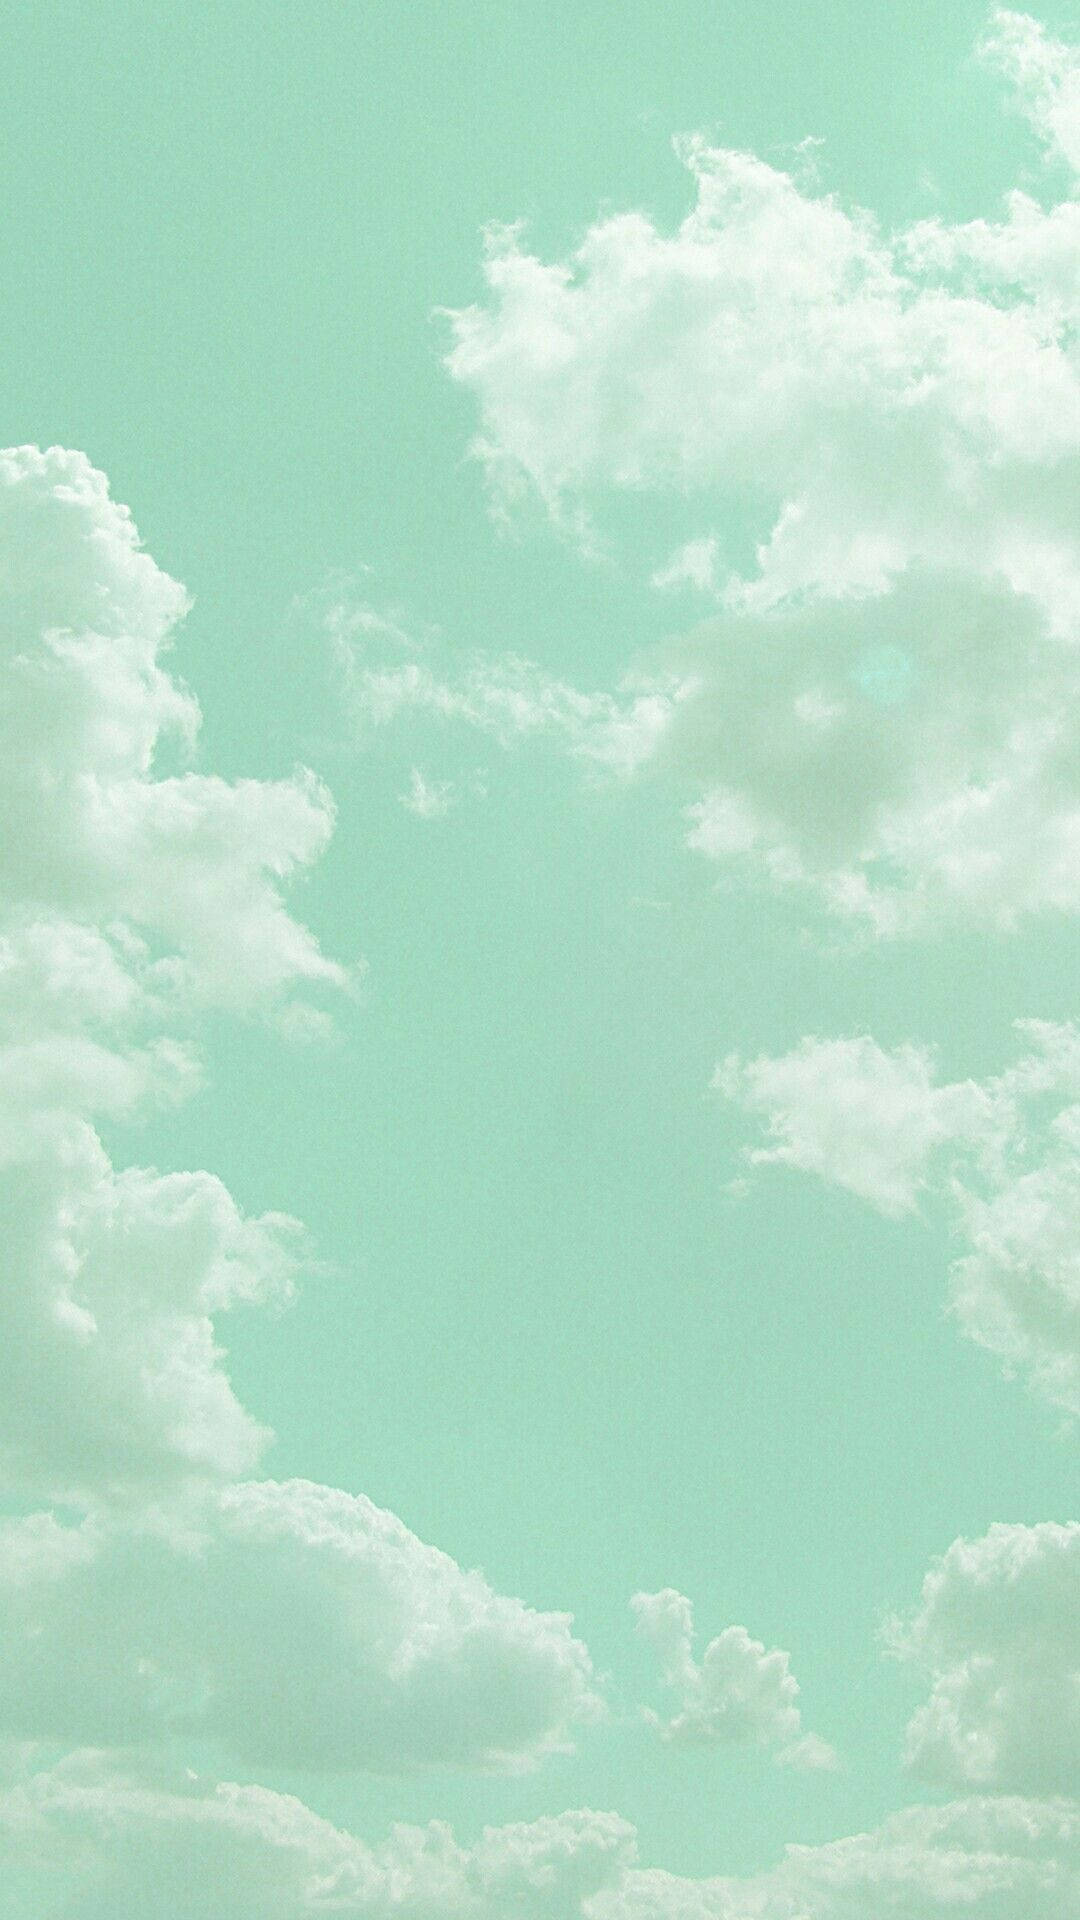 Cloudy Sky Mint Green Iphone Wallpaper